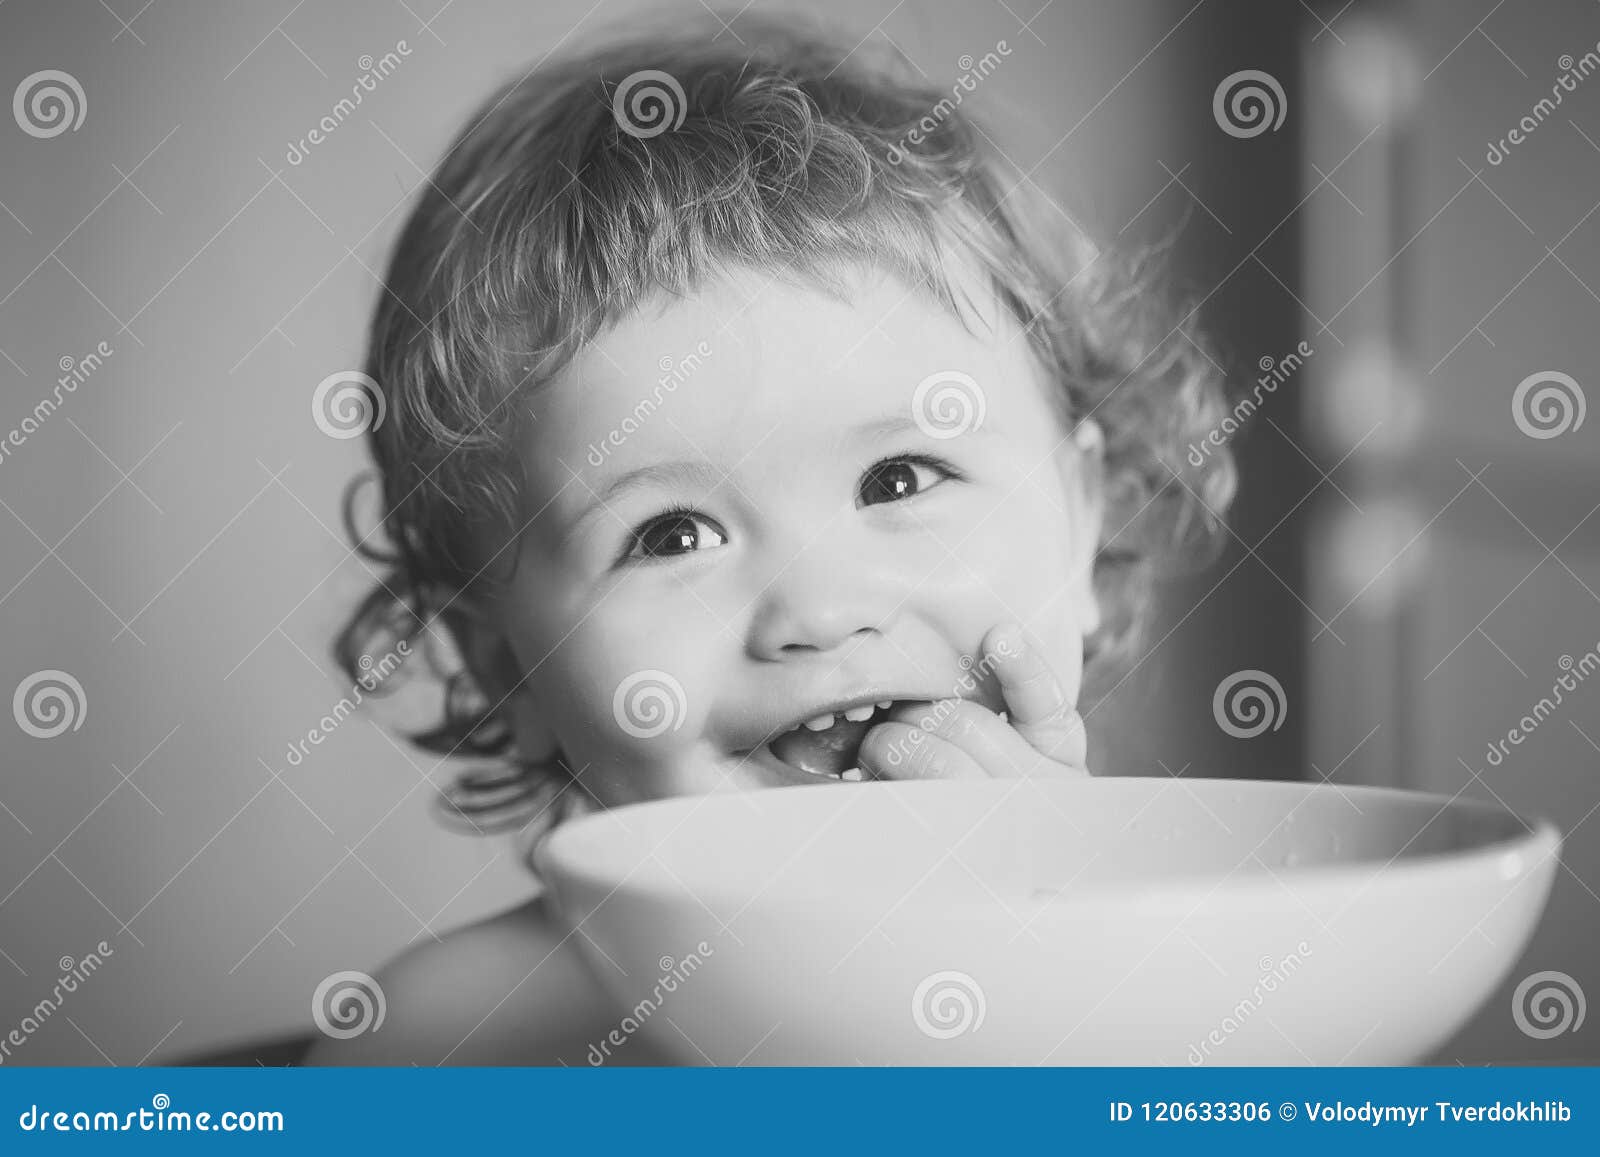 Child Eats Porridge. Portrait of Little Baby Boy Eating Stock Photo ...